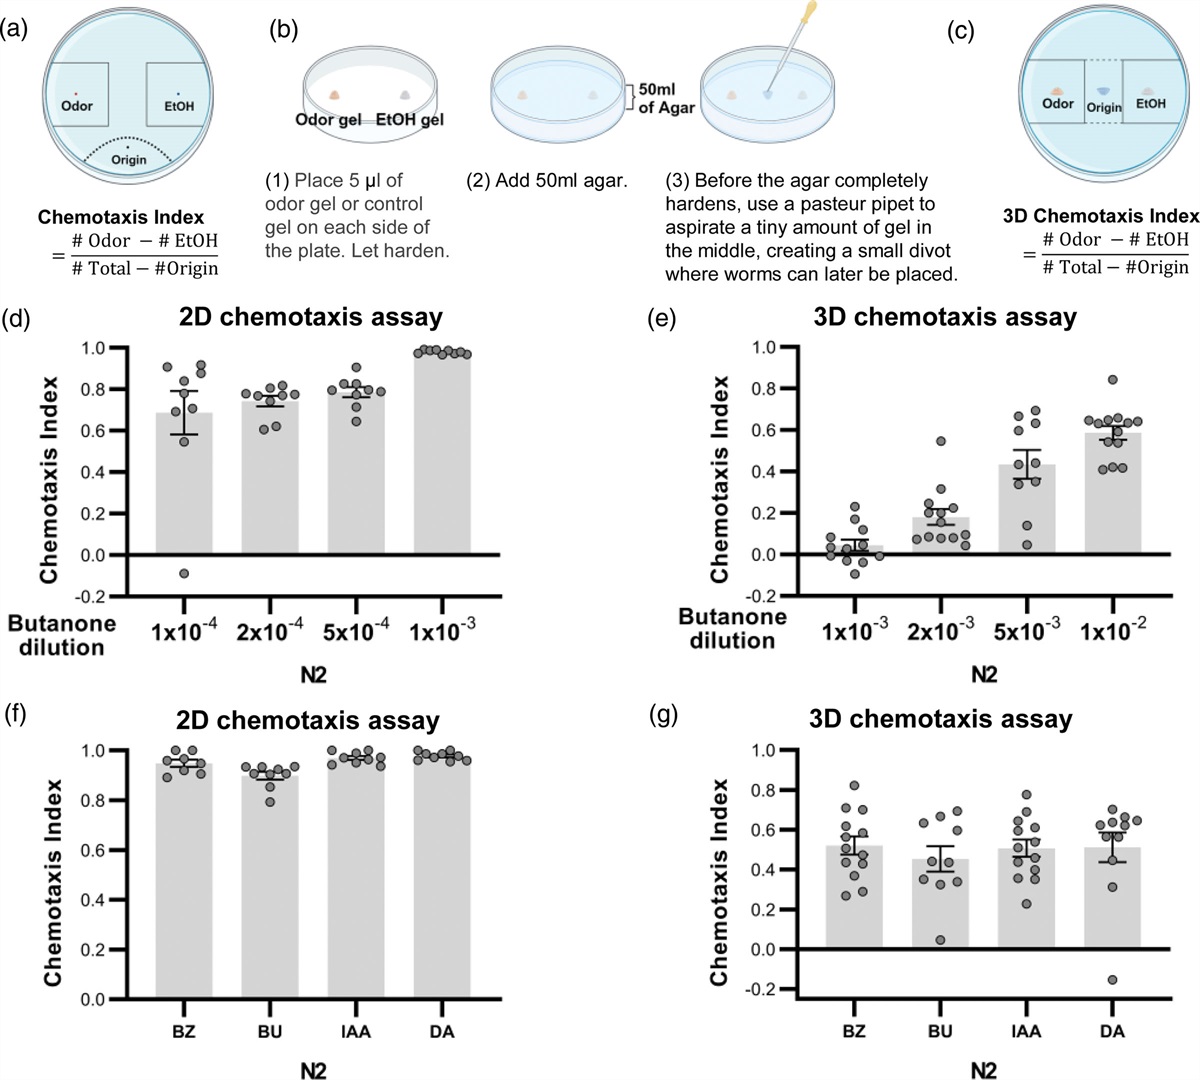 Precise sensorimotor control impacts reproductive fitness of C. elegans in 3D environments